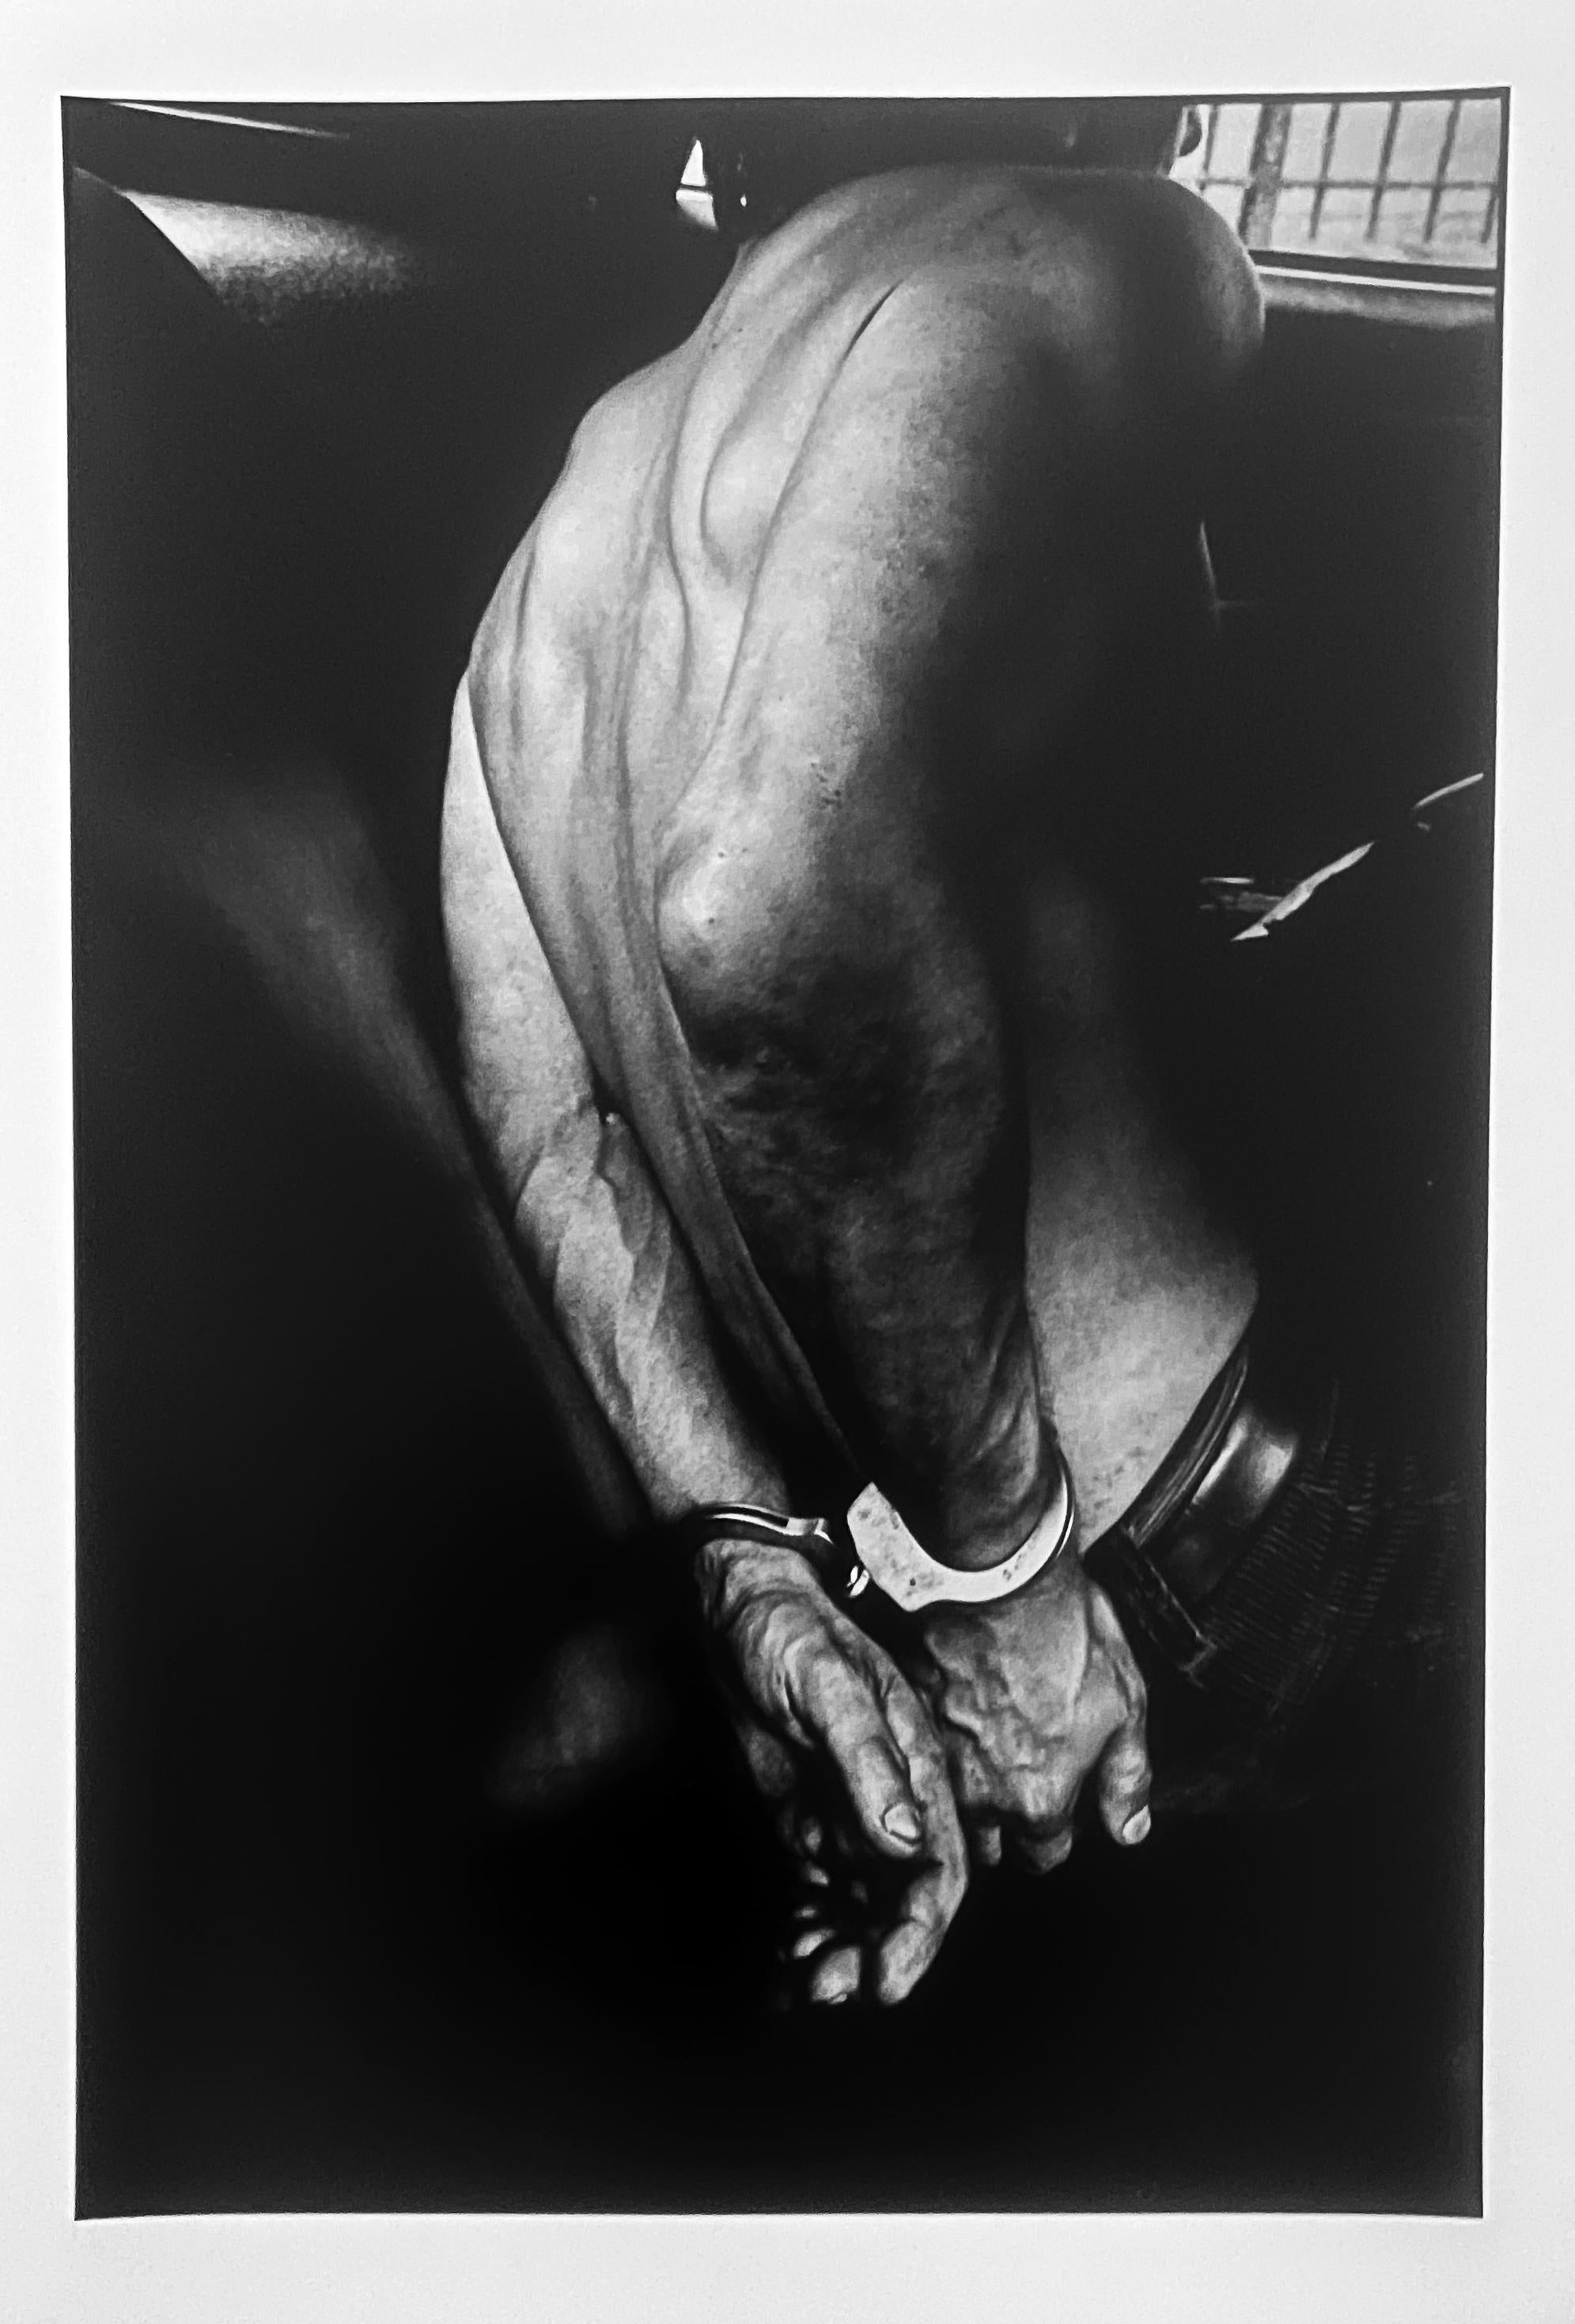 Handcuffed, New York City, Police Street Photography Series 1970s